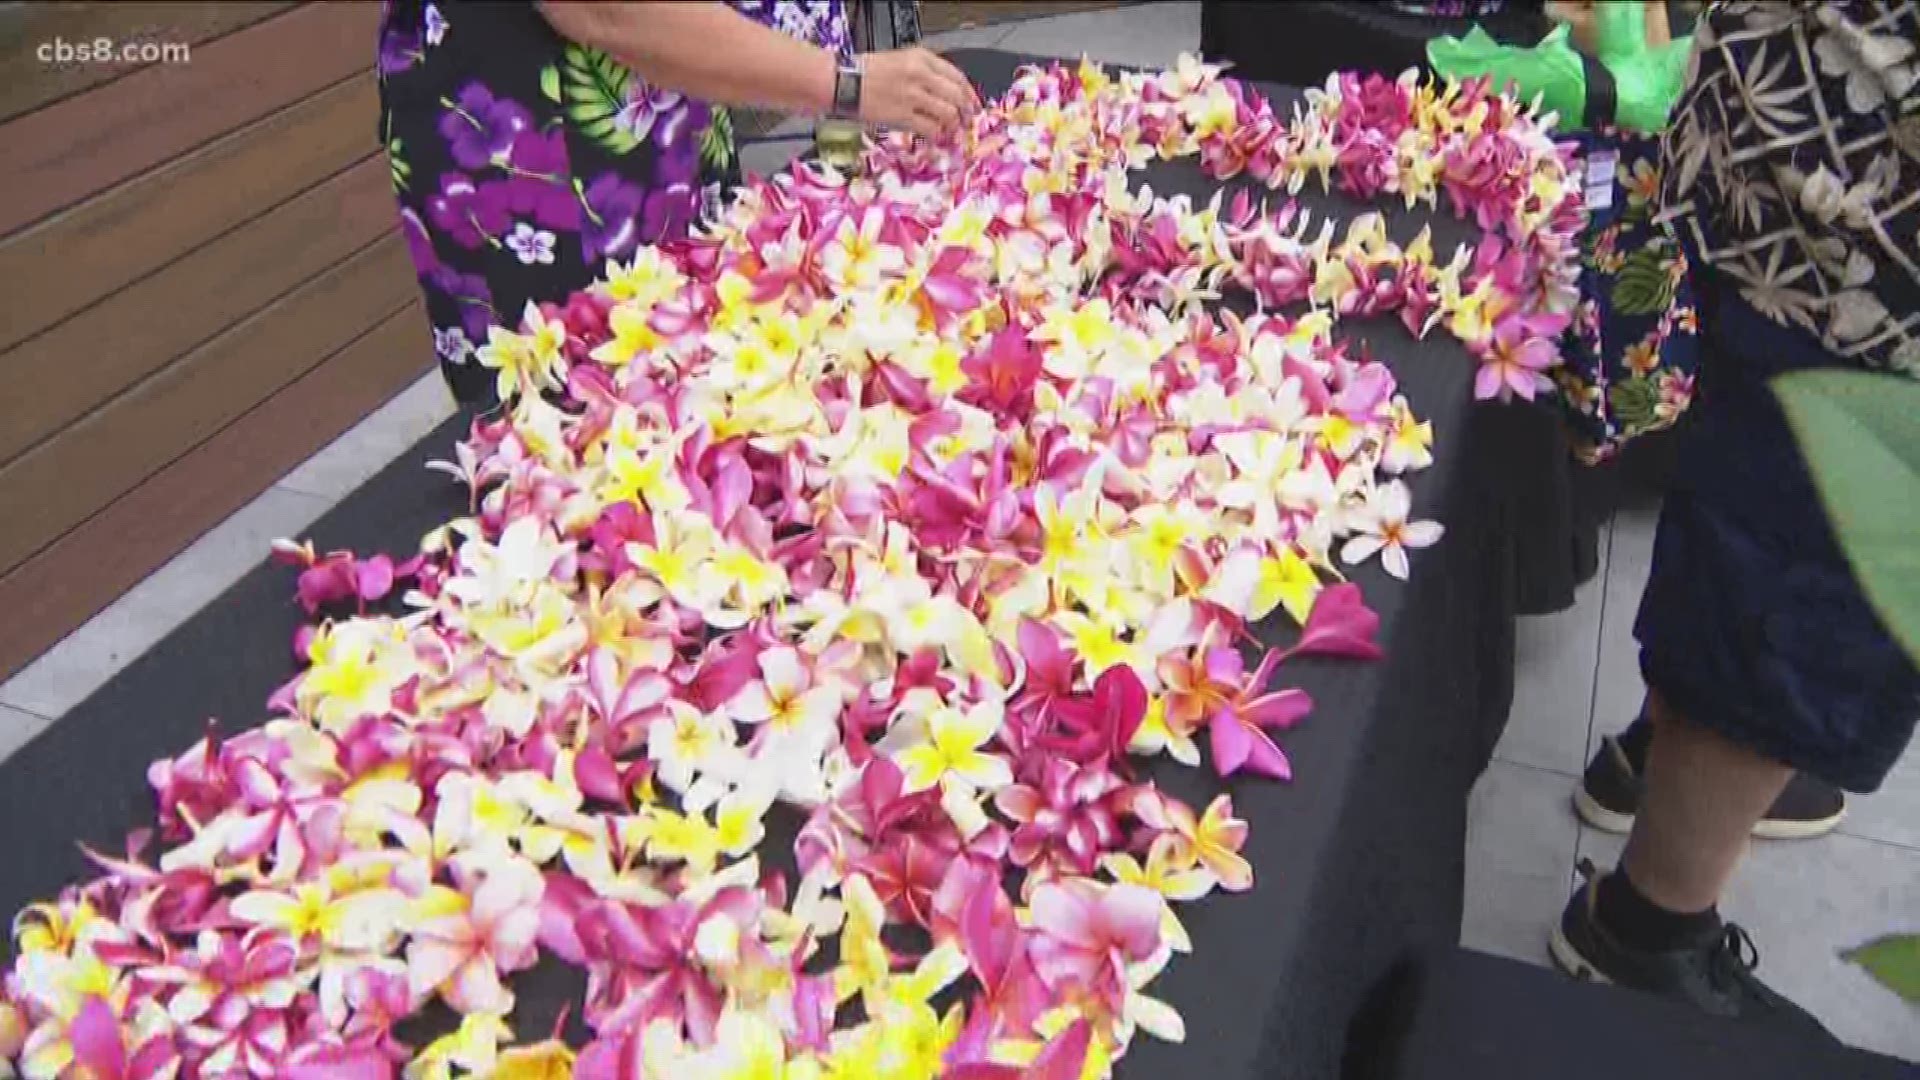 Enter your plumeria at the 20th Annual Hawaiian Plumeria Festival